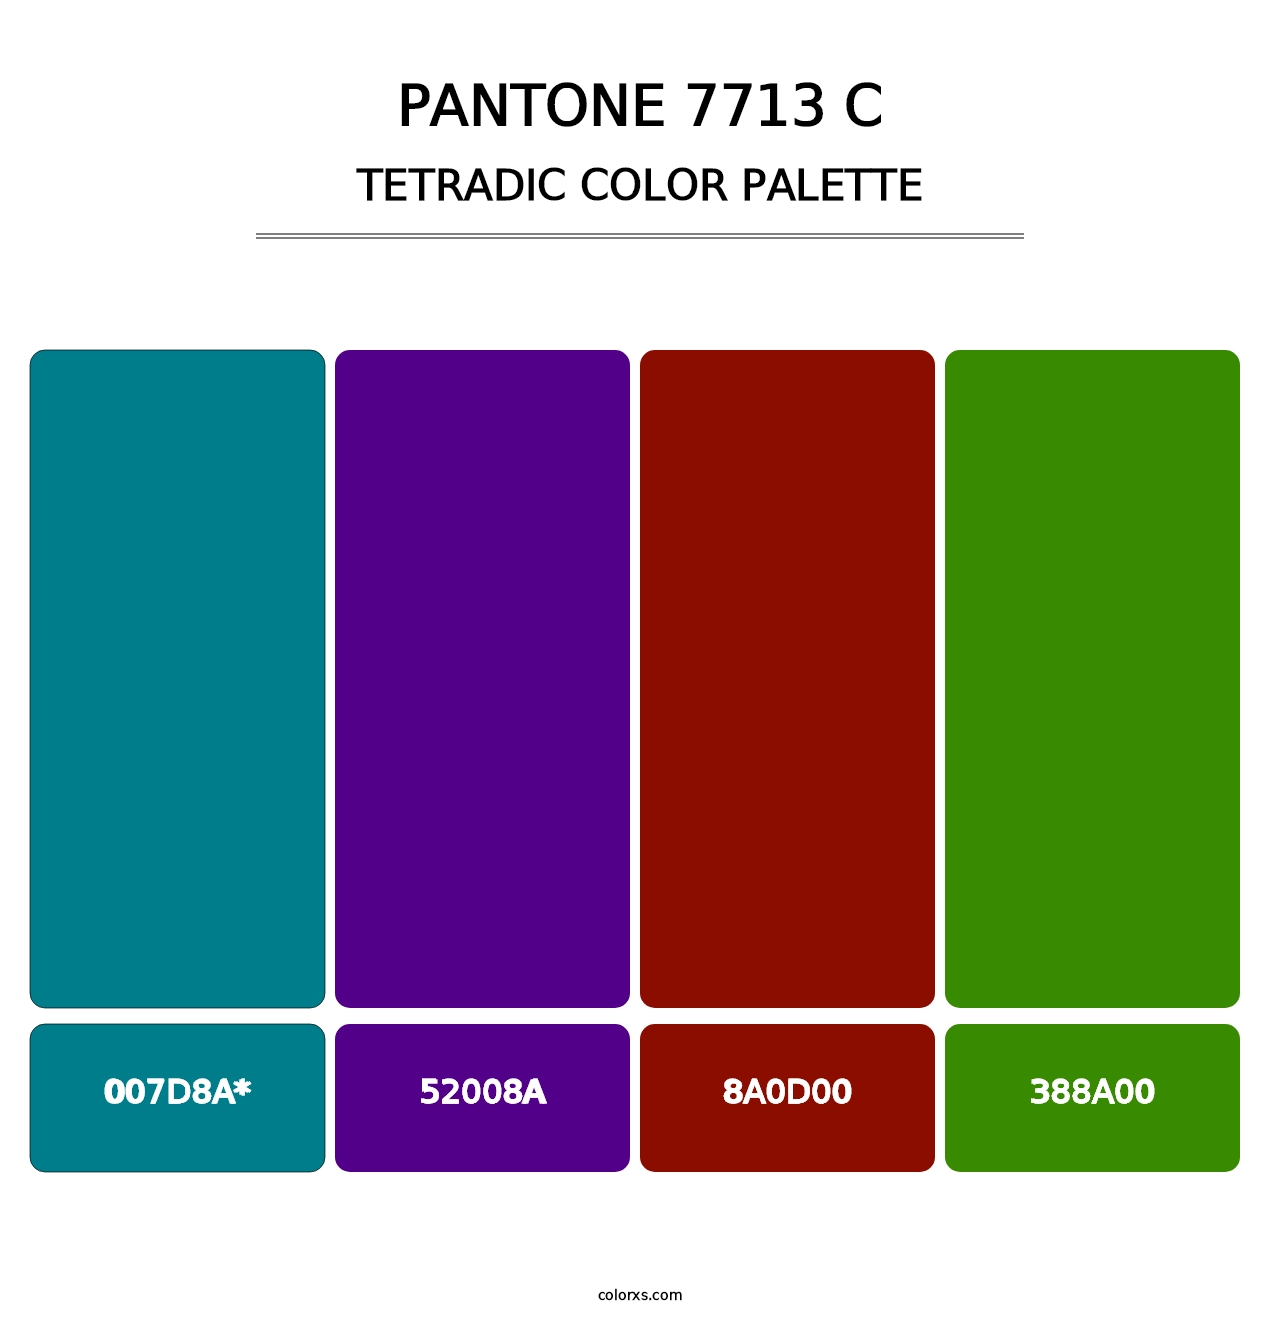 PANTONE 7713 C - Tetradic Color Palette